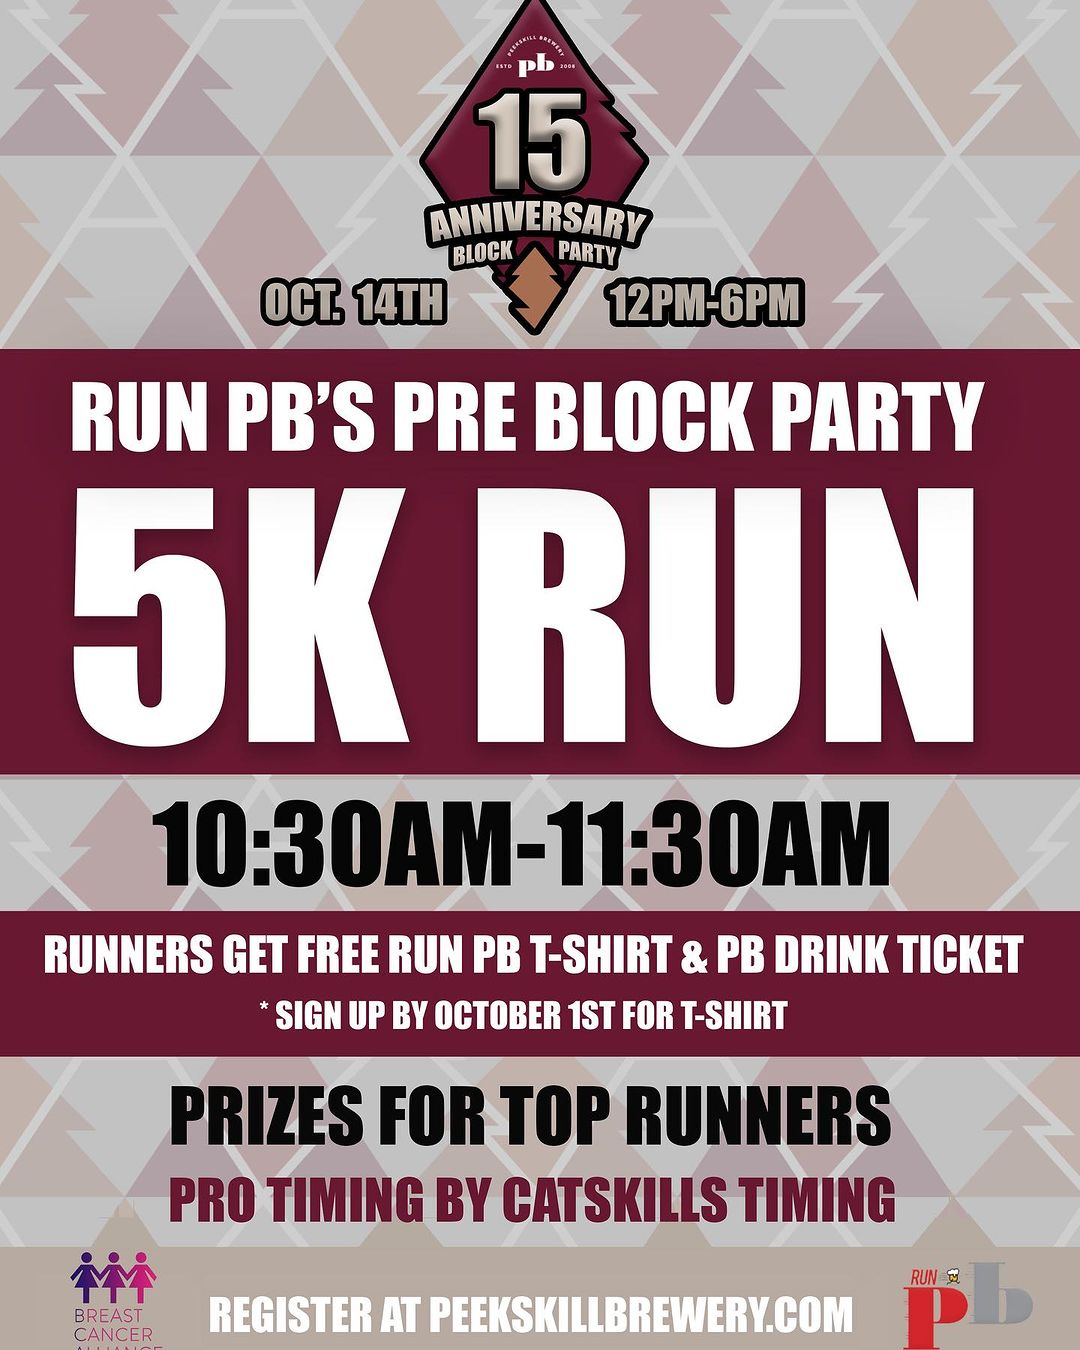 Flier for Run PB Block Party 5k